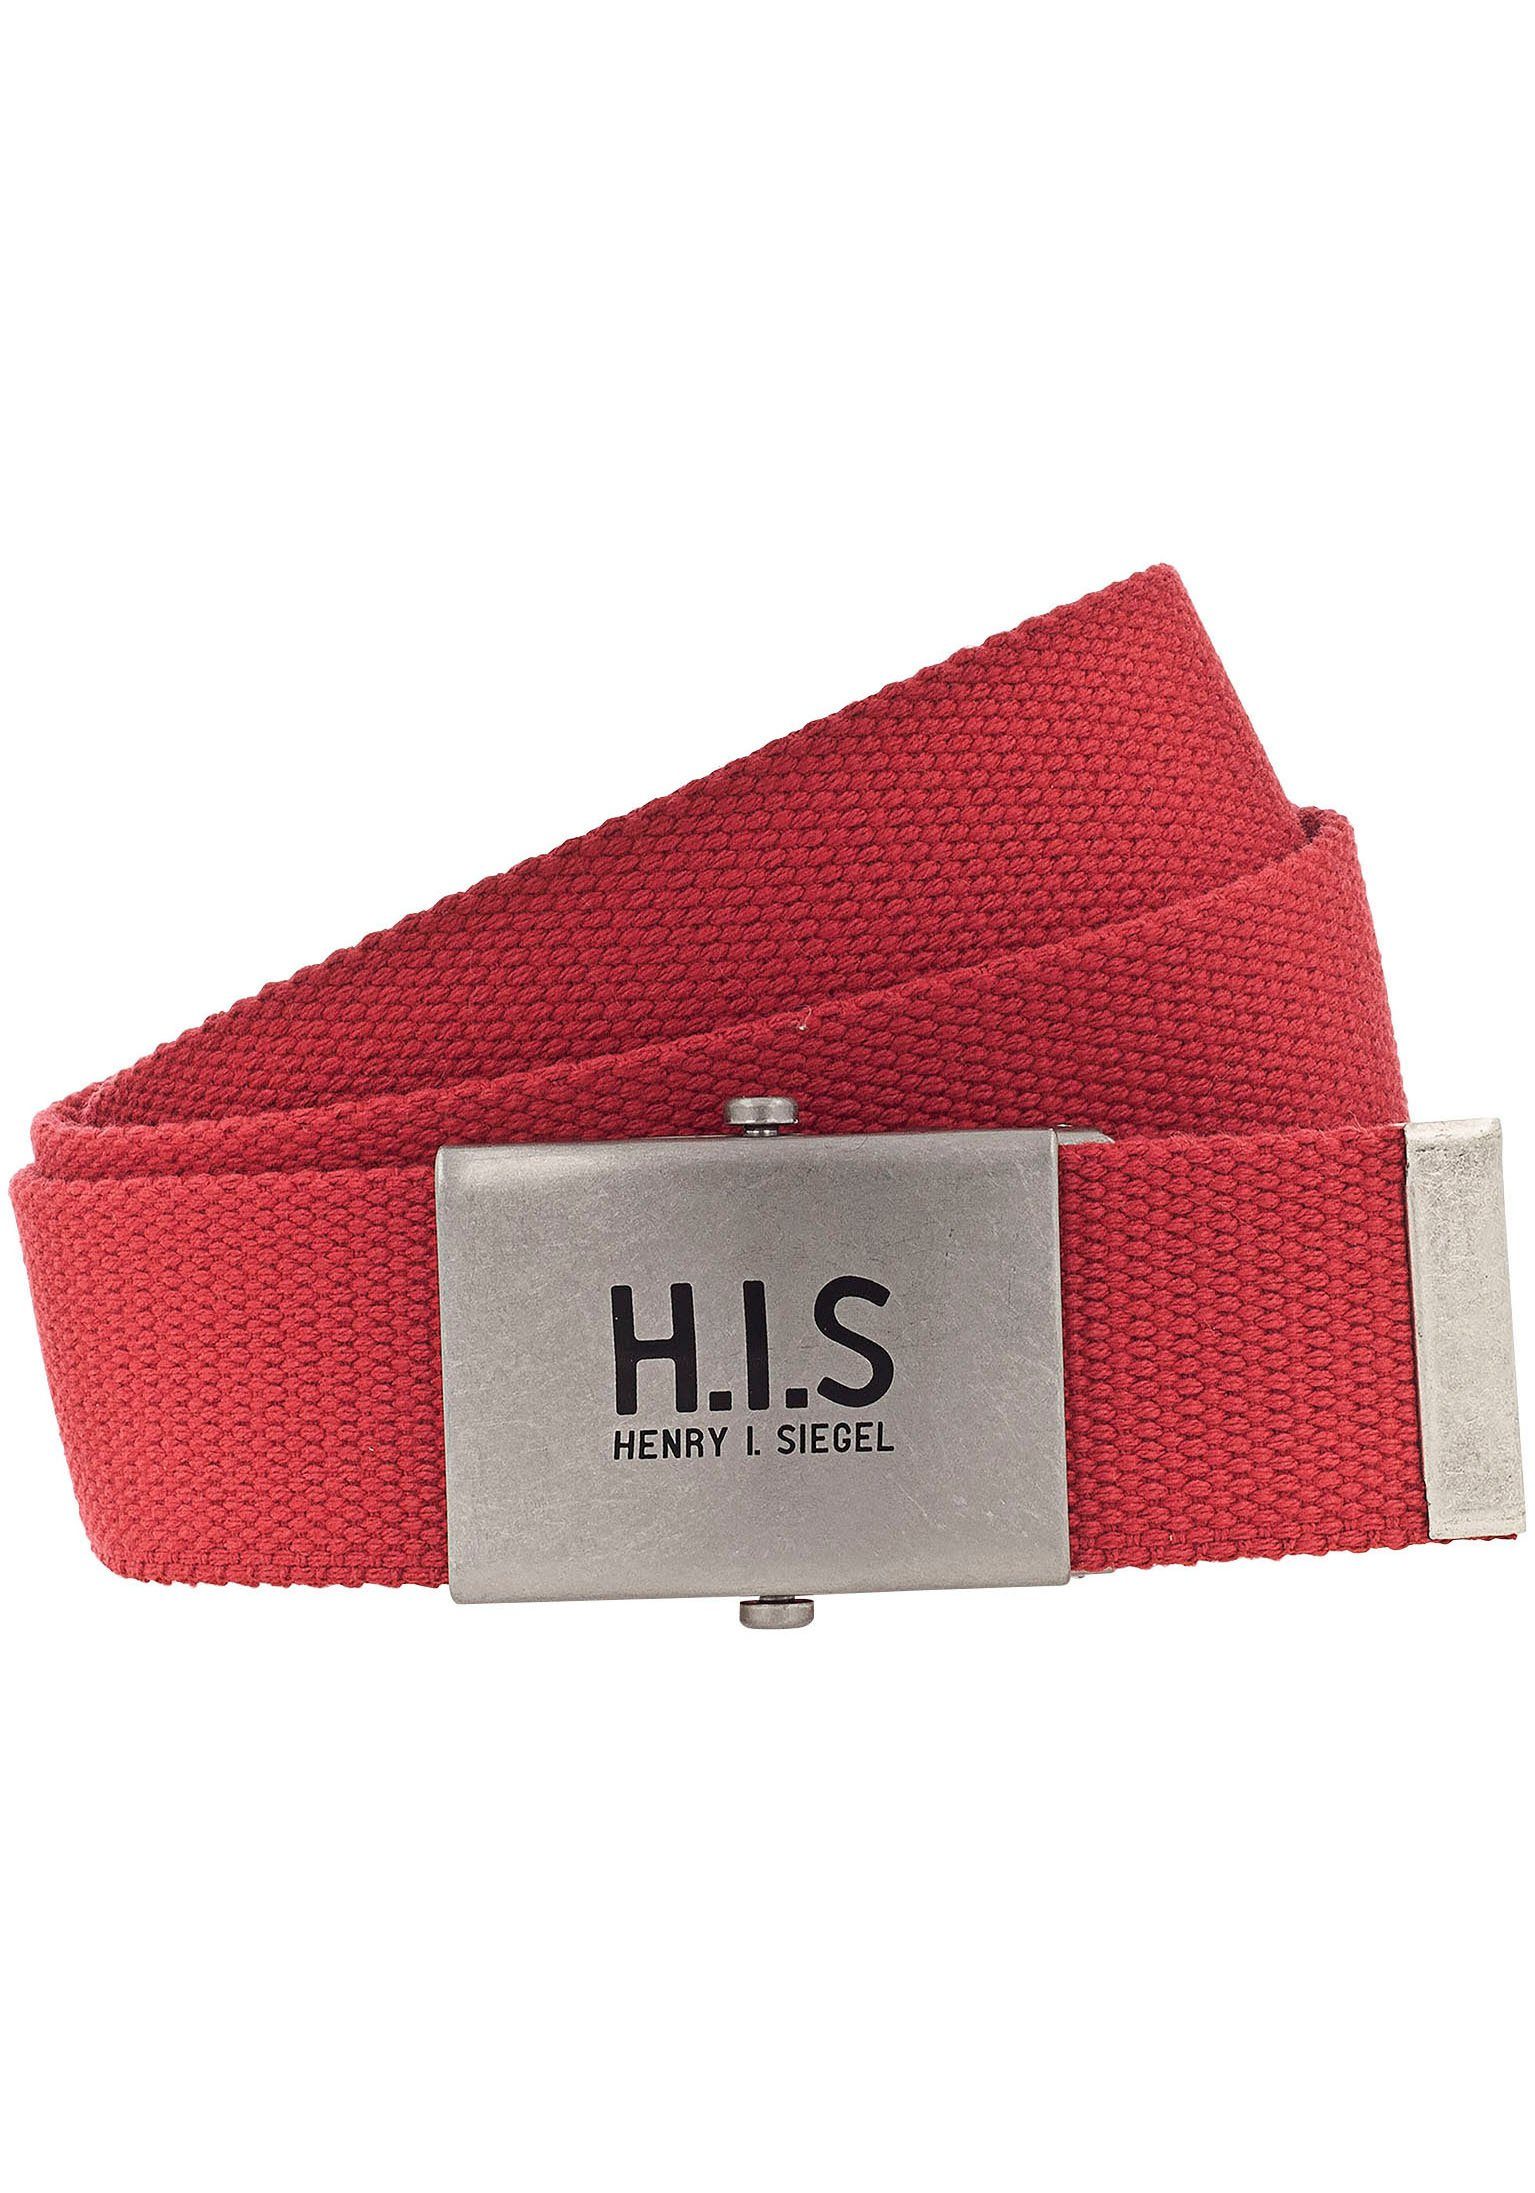 H.I.S Stoffgürtel Bandgürtel mit H.I.S Logo auf der Koppelschließe rot | Stoffgürtel